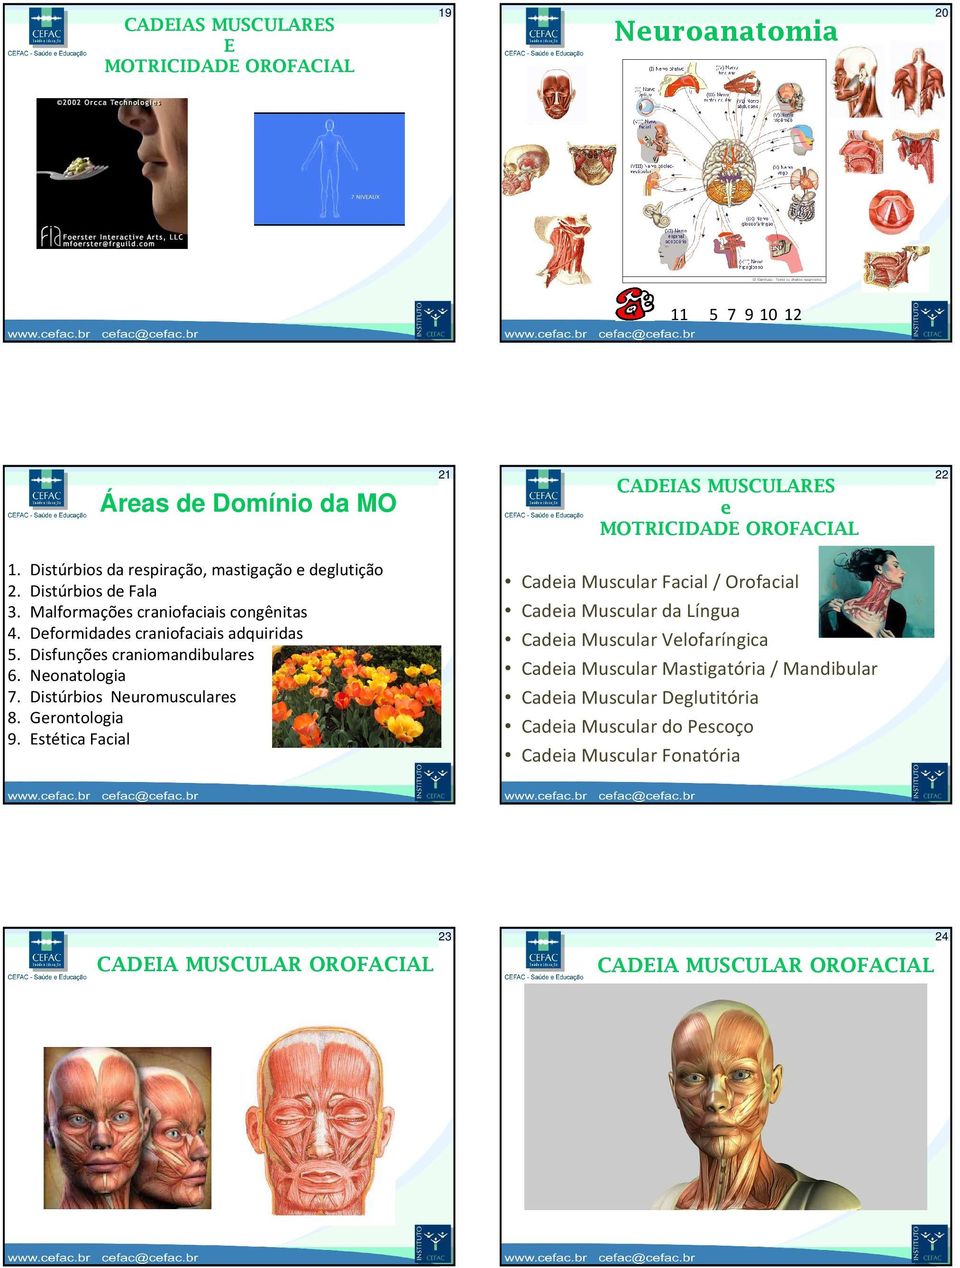 Disfunções craniomandibulares 6. Neonatologia 7. Distúrbios Neuromusculares 8. Gerontologia 9.